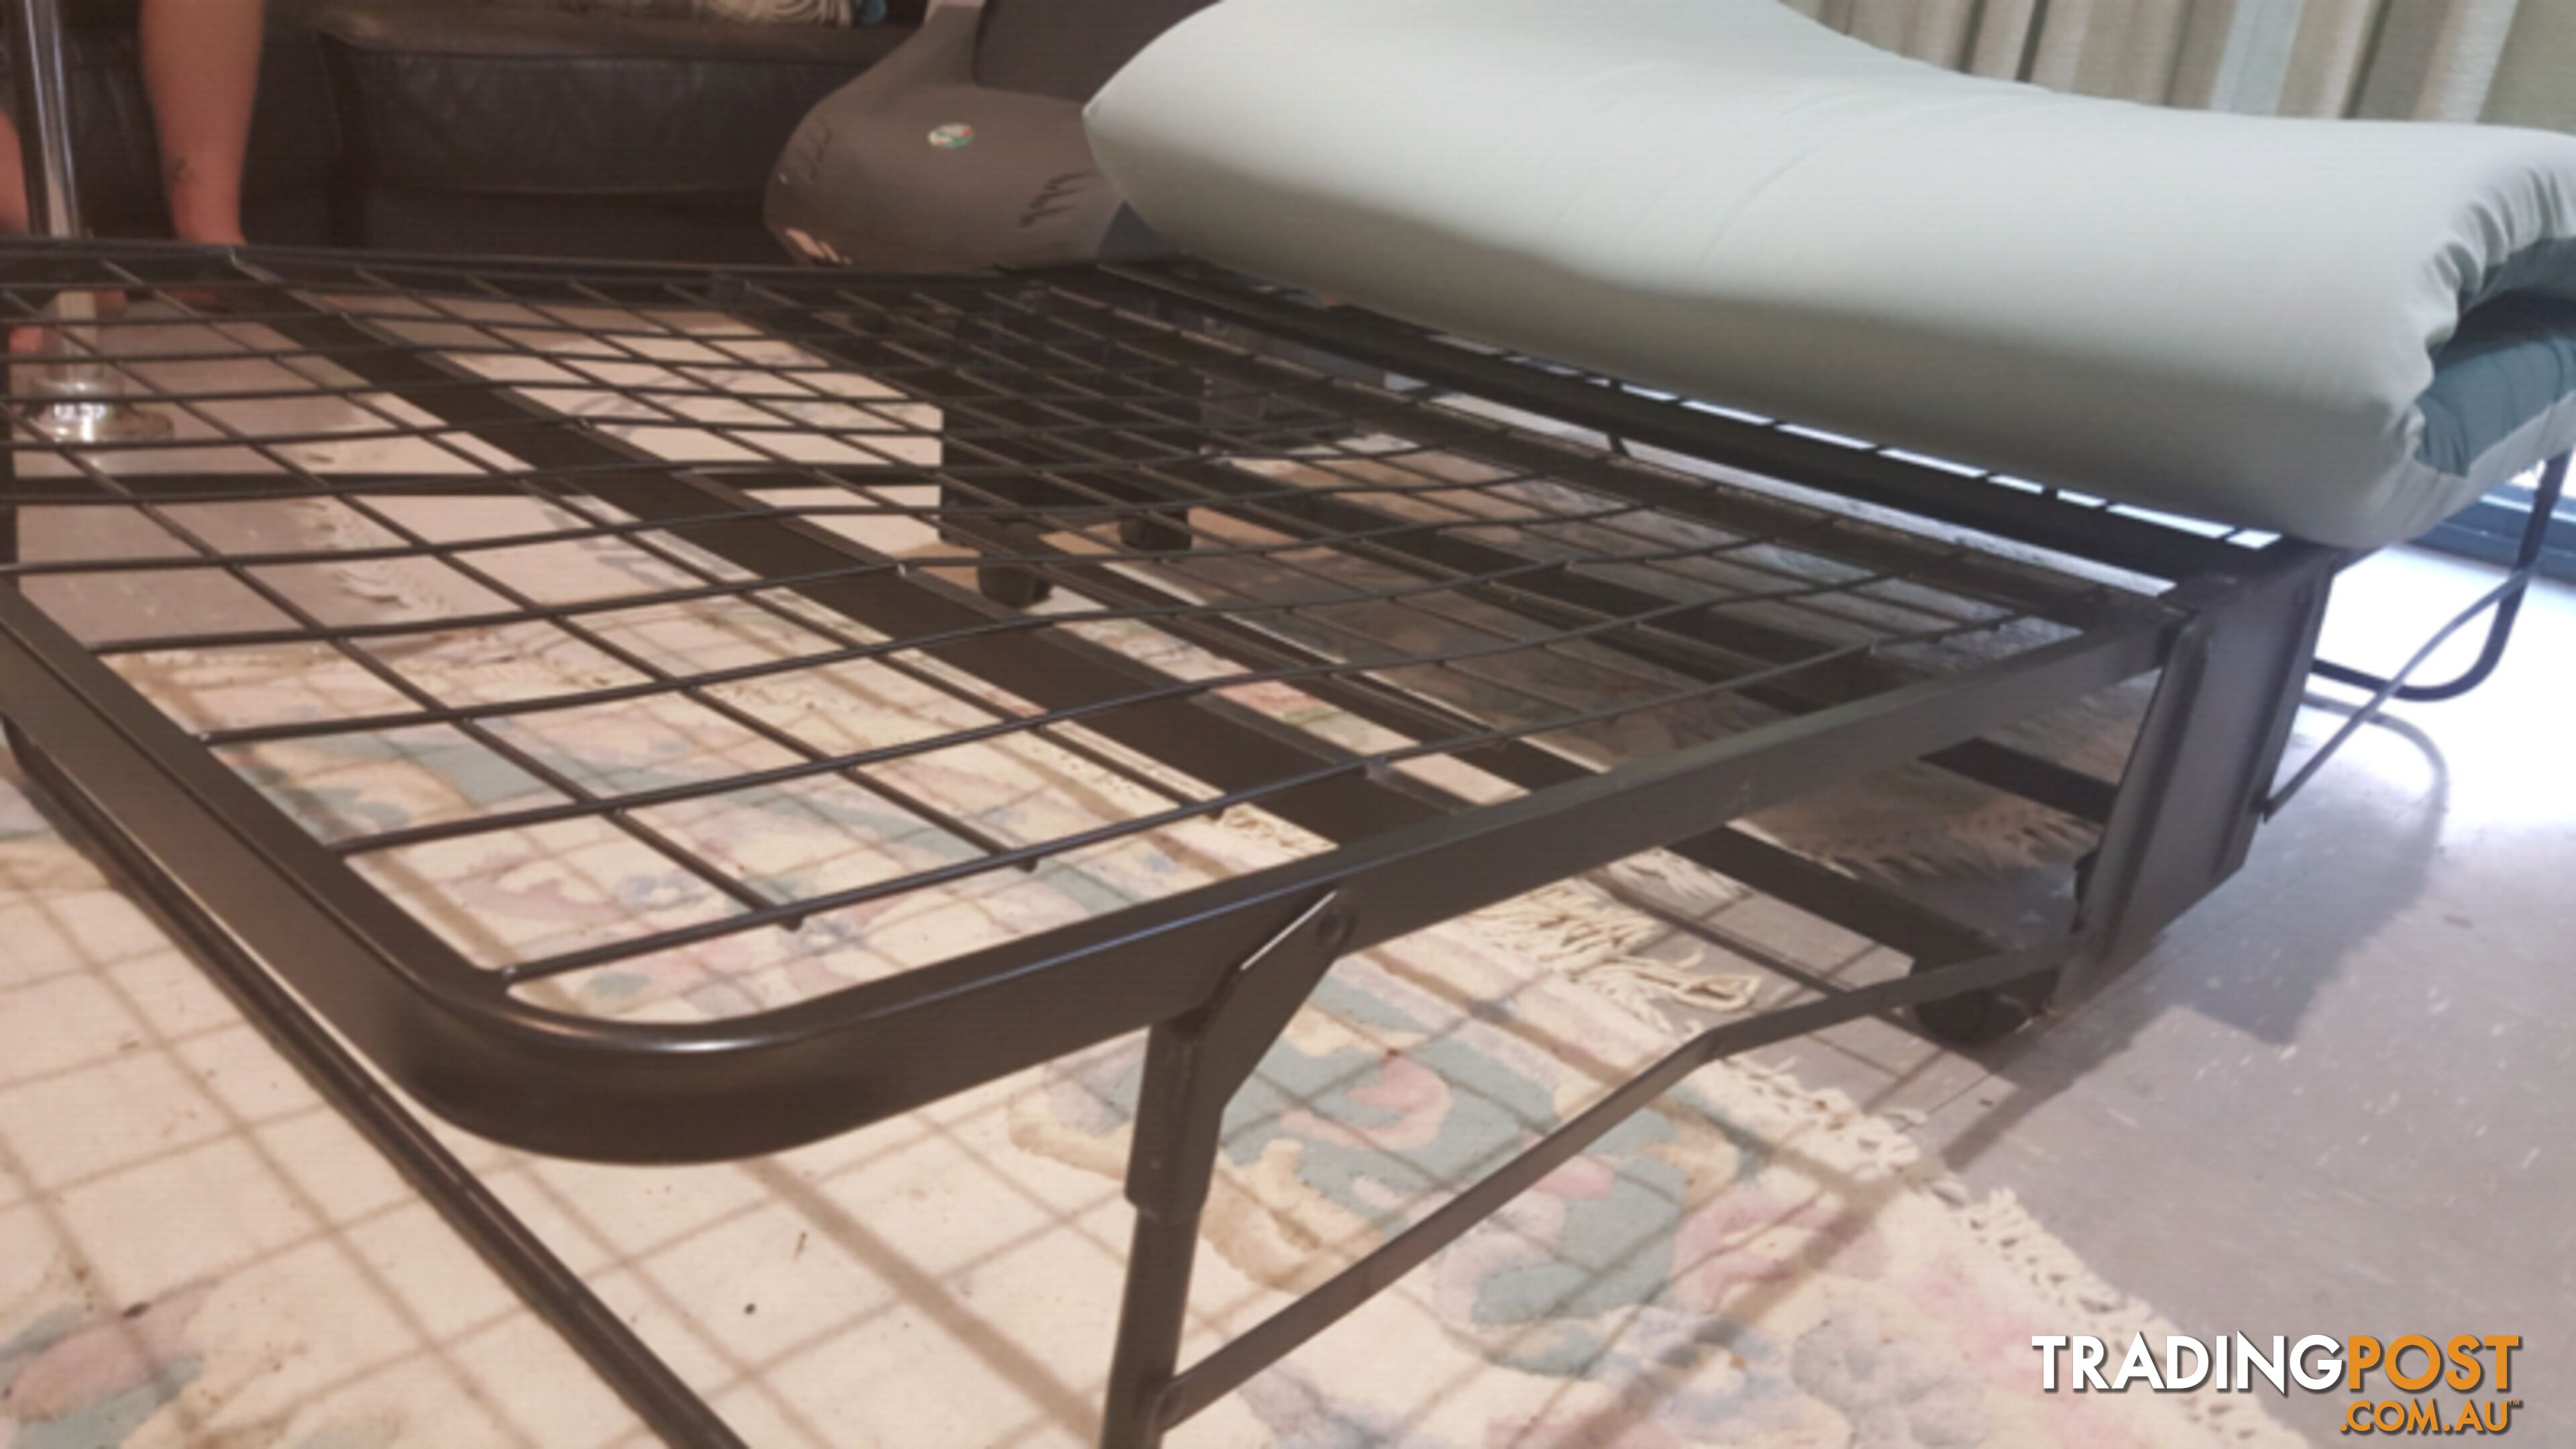 Single Folding Metal Frame Bed